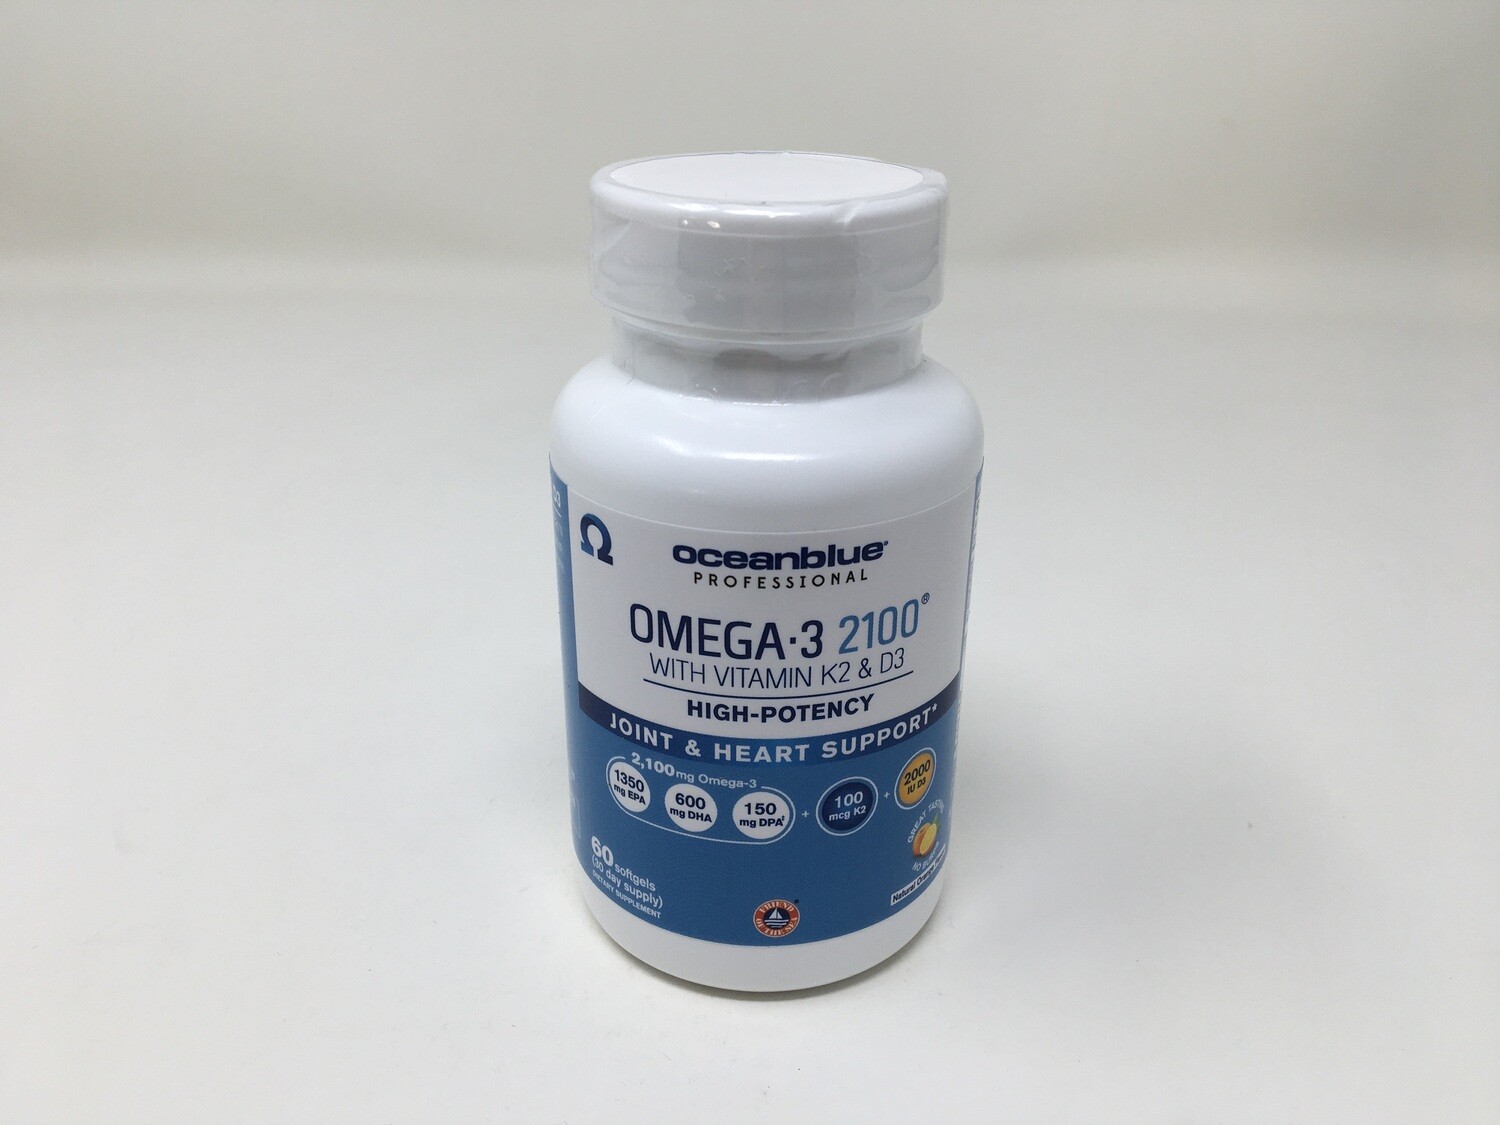 Omega-3 2100 with Vitamin K2&D3 60sg(Ocean Blue)